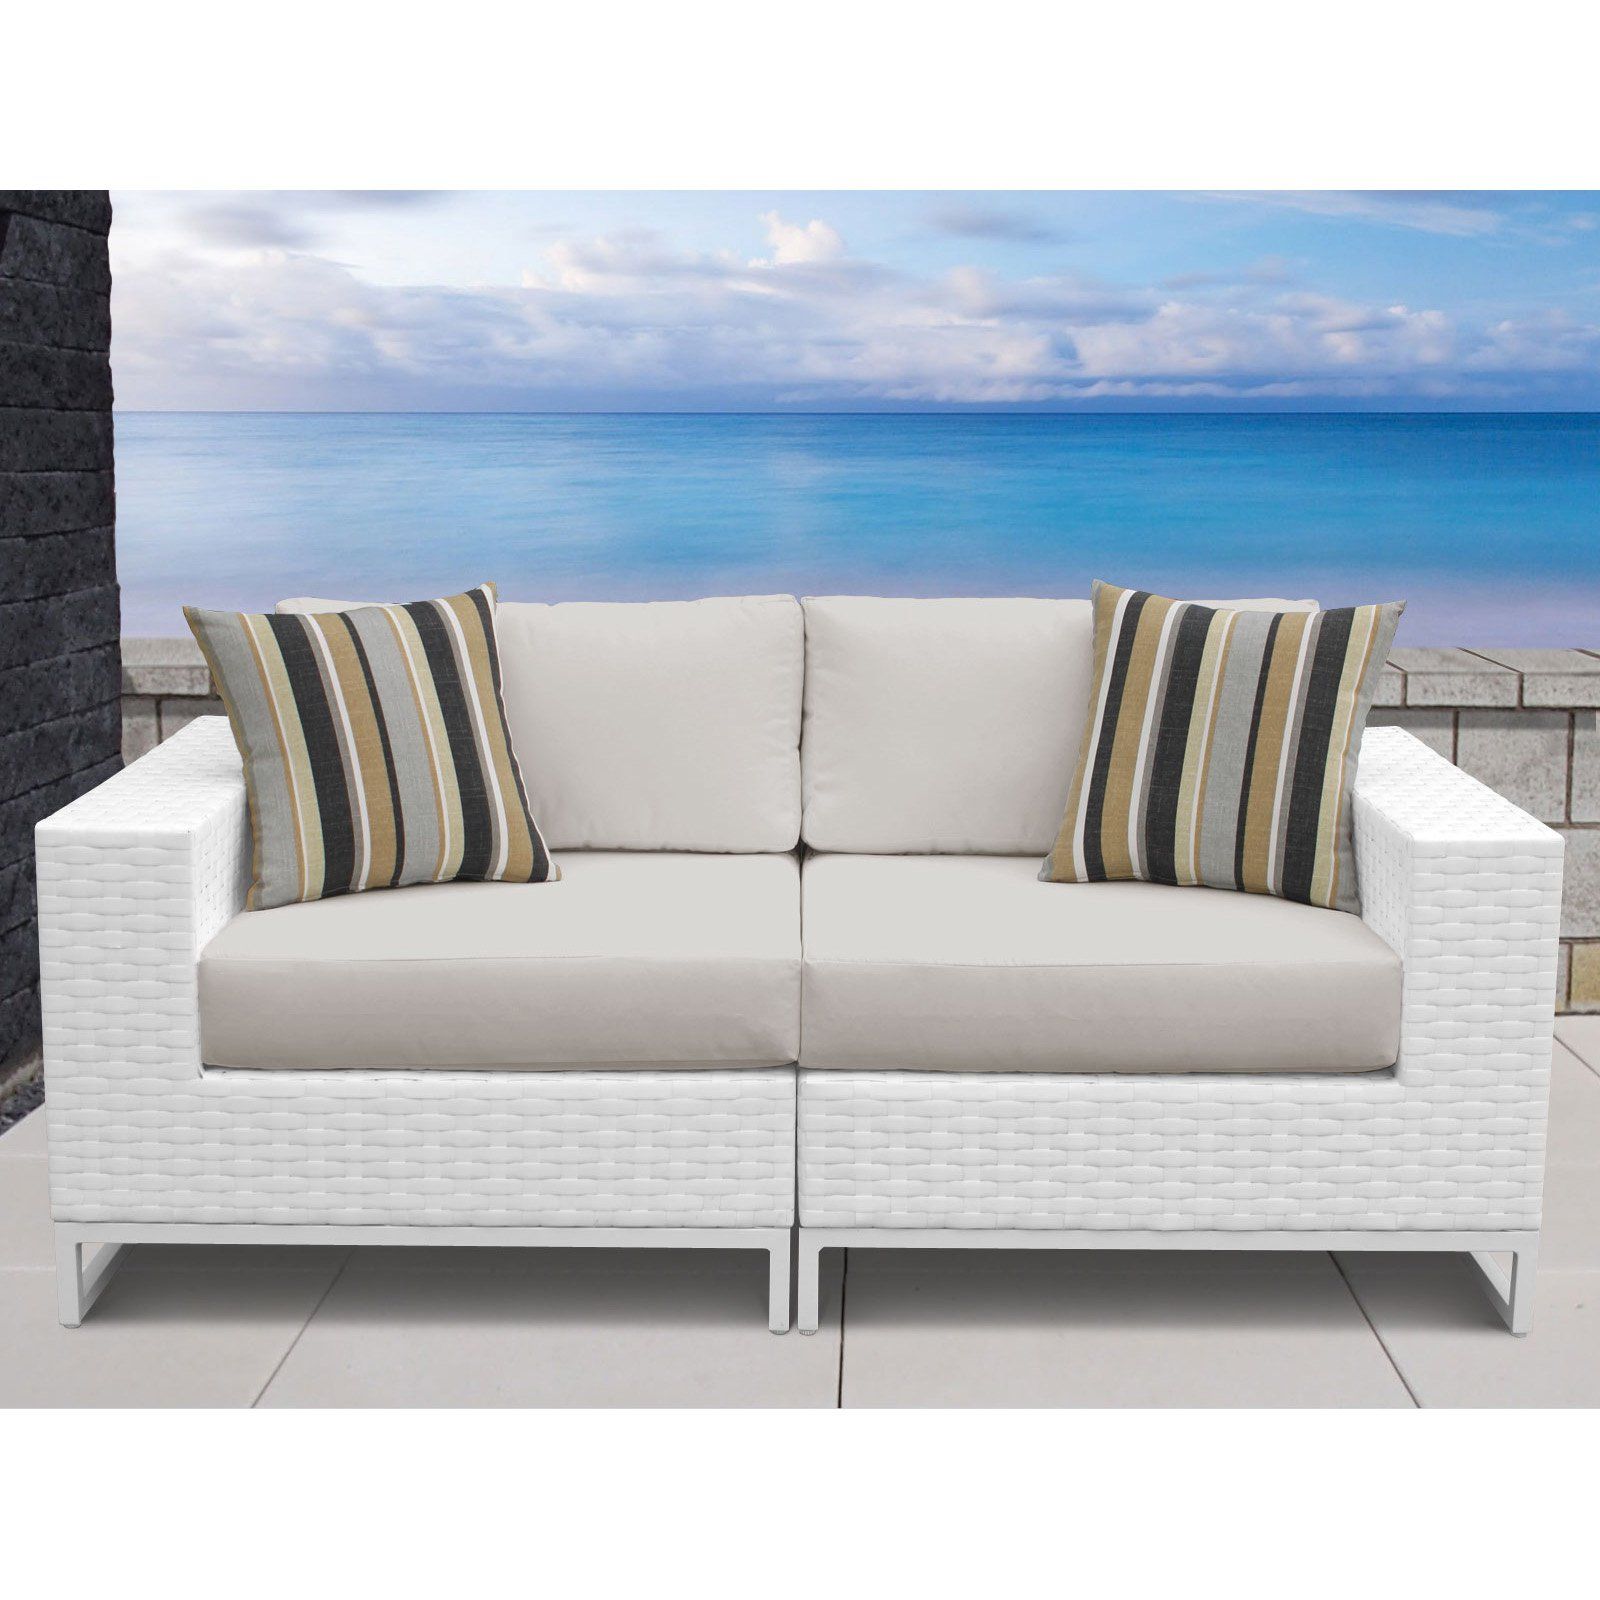 2019 Tk Classics Miami Wicker 2 Piece Patio Sectional Sofa With 2 Piece Outdoor Wicker Sectional Sofa Sets (View 2 of 15)